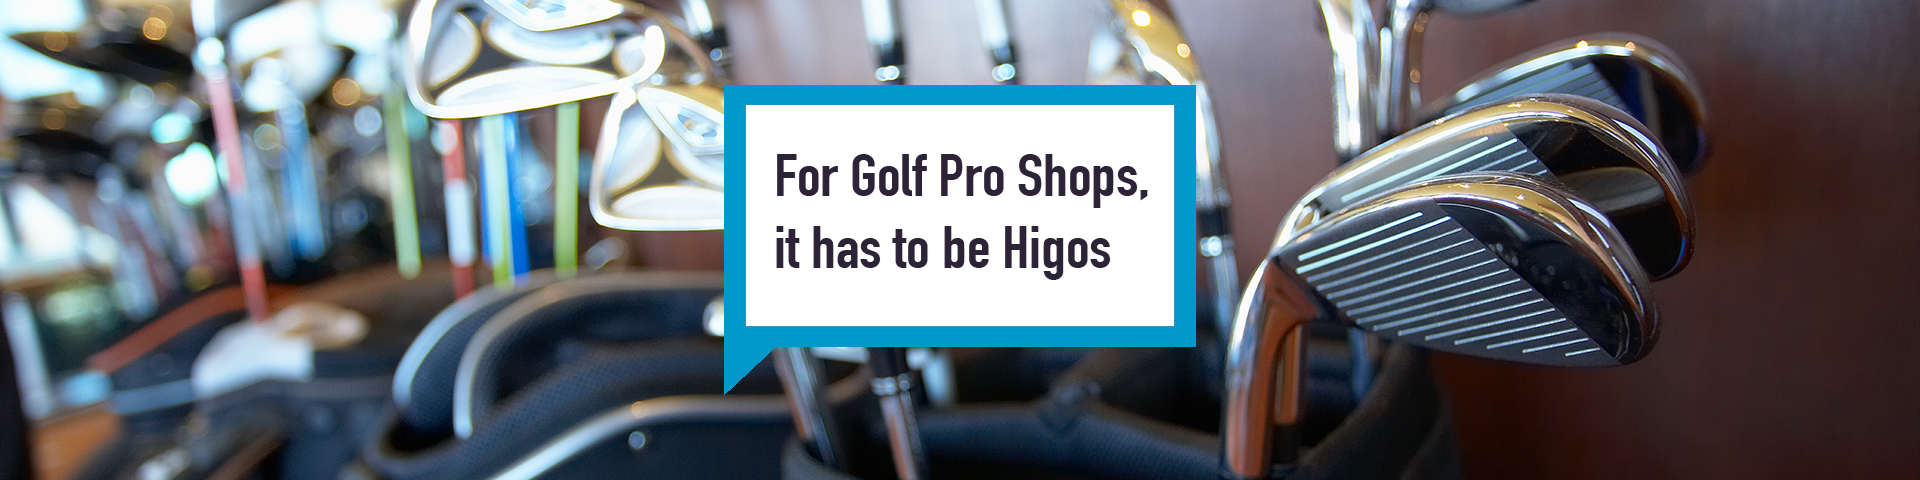 Higos Business insurance golf pro shop